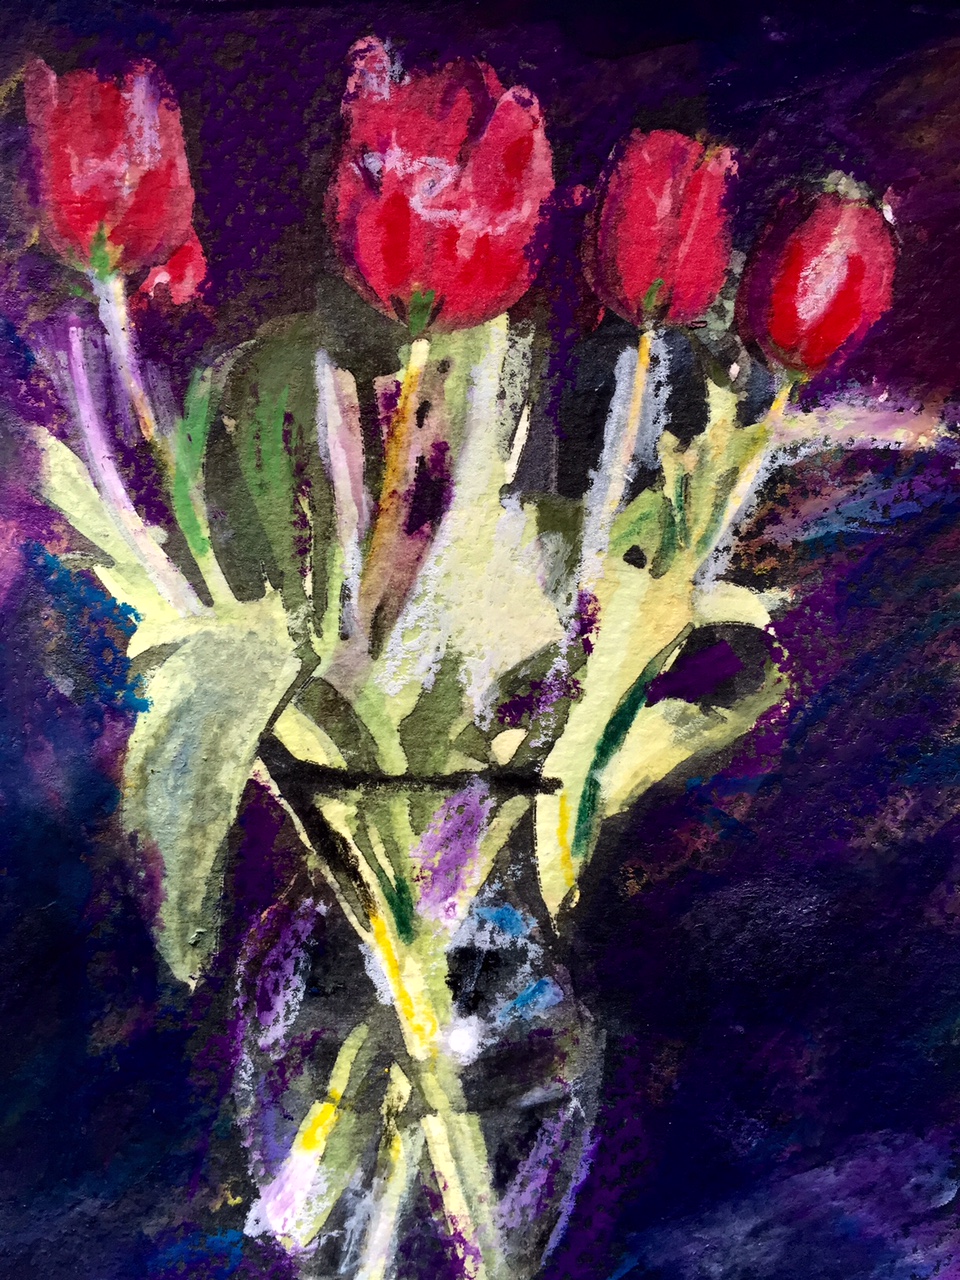 tulips painting